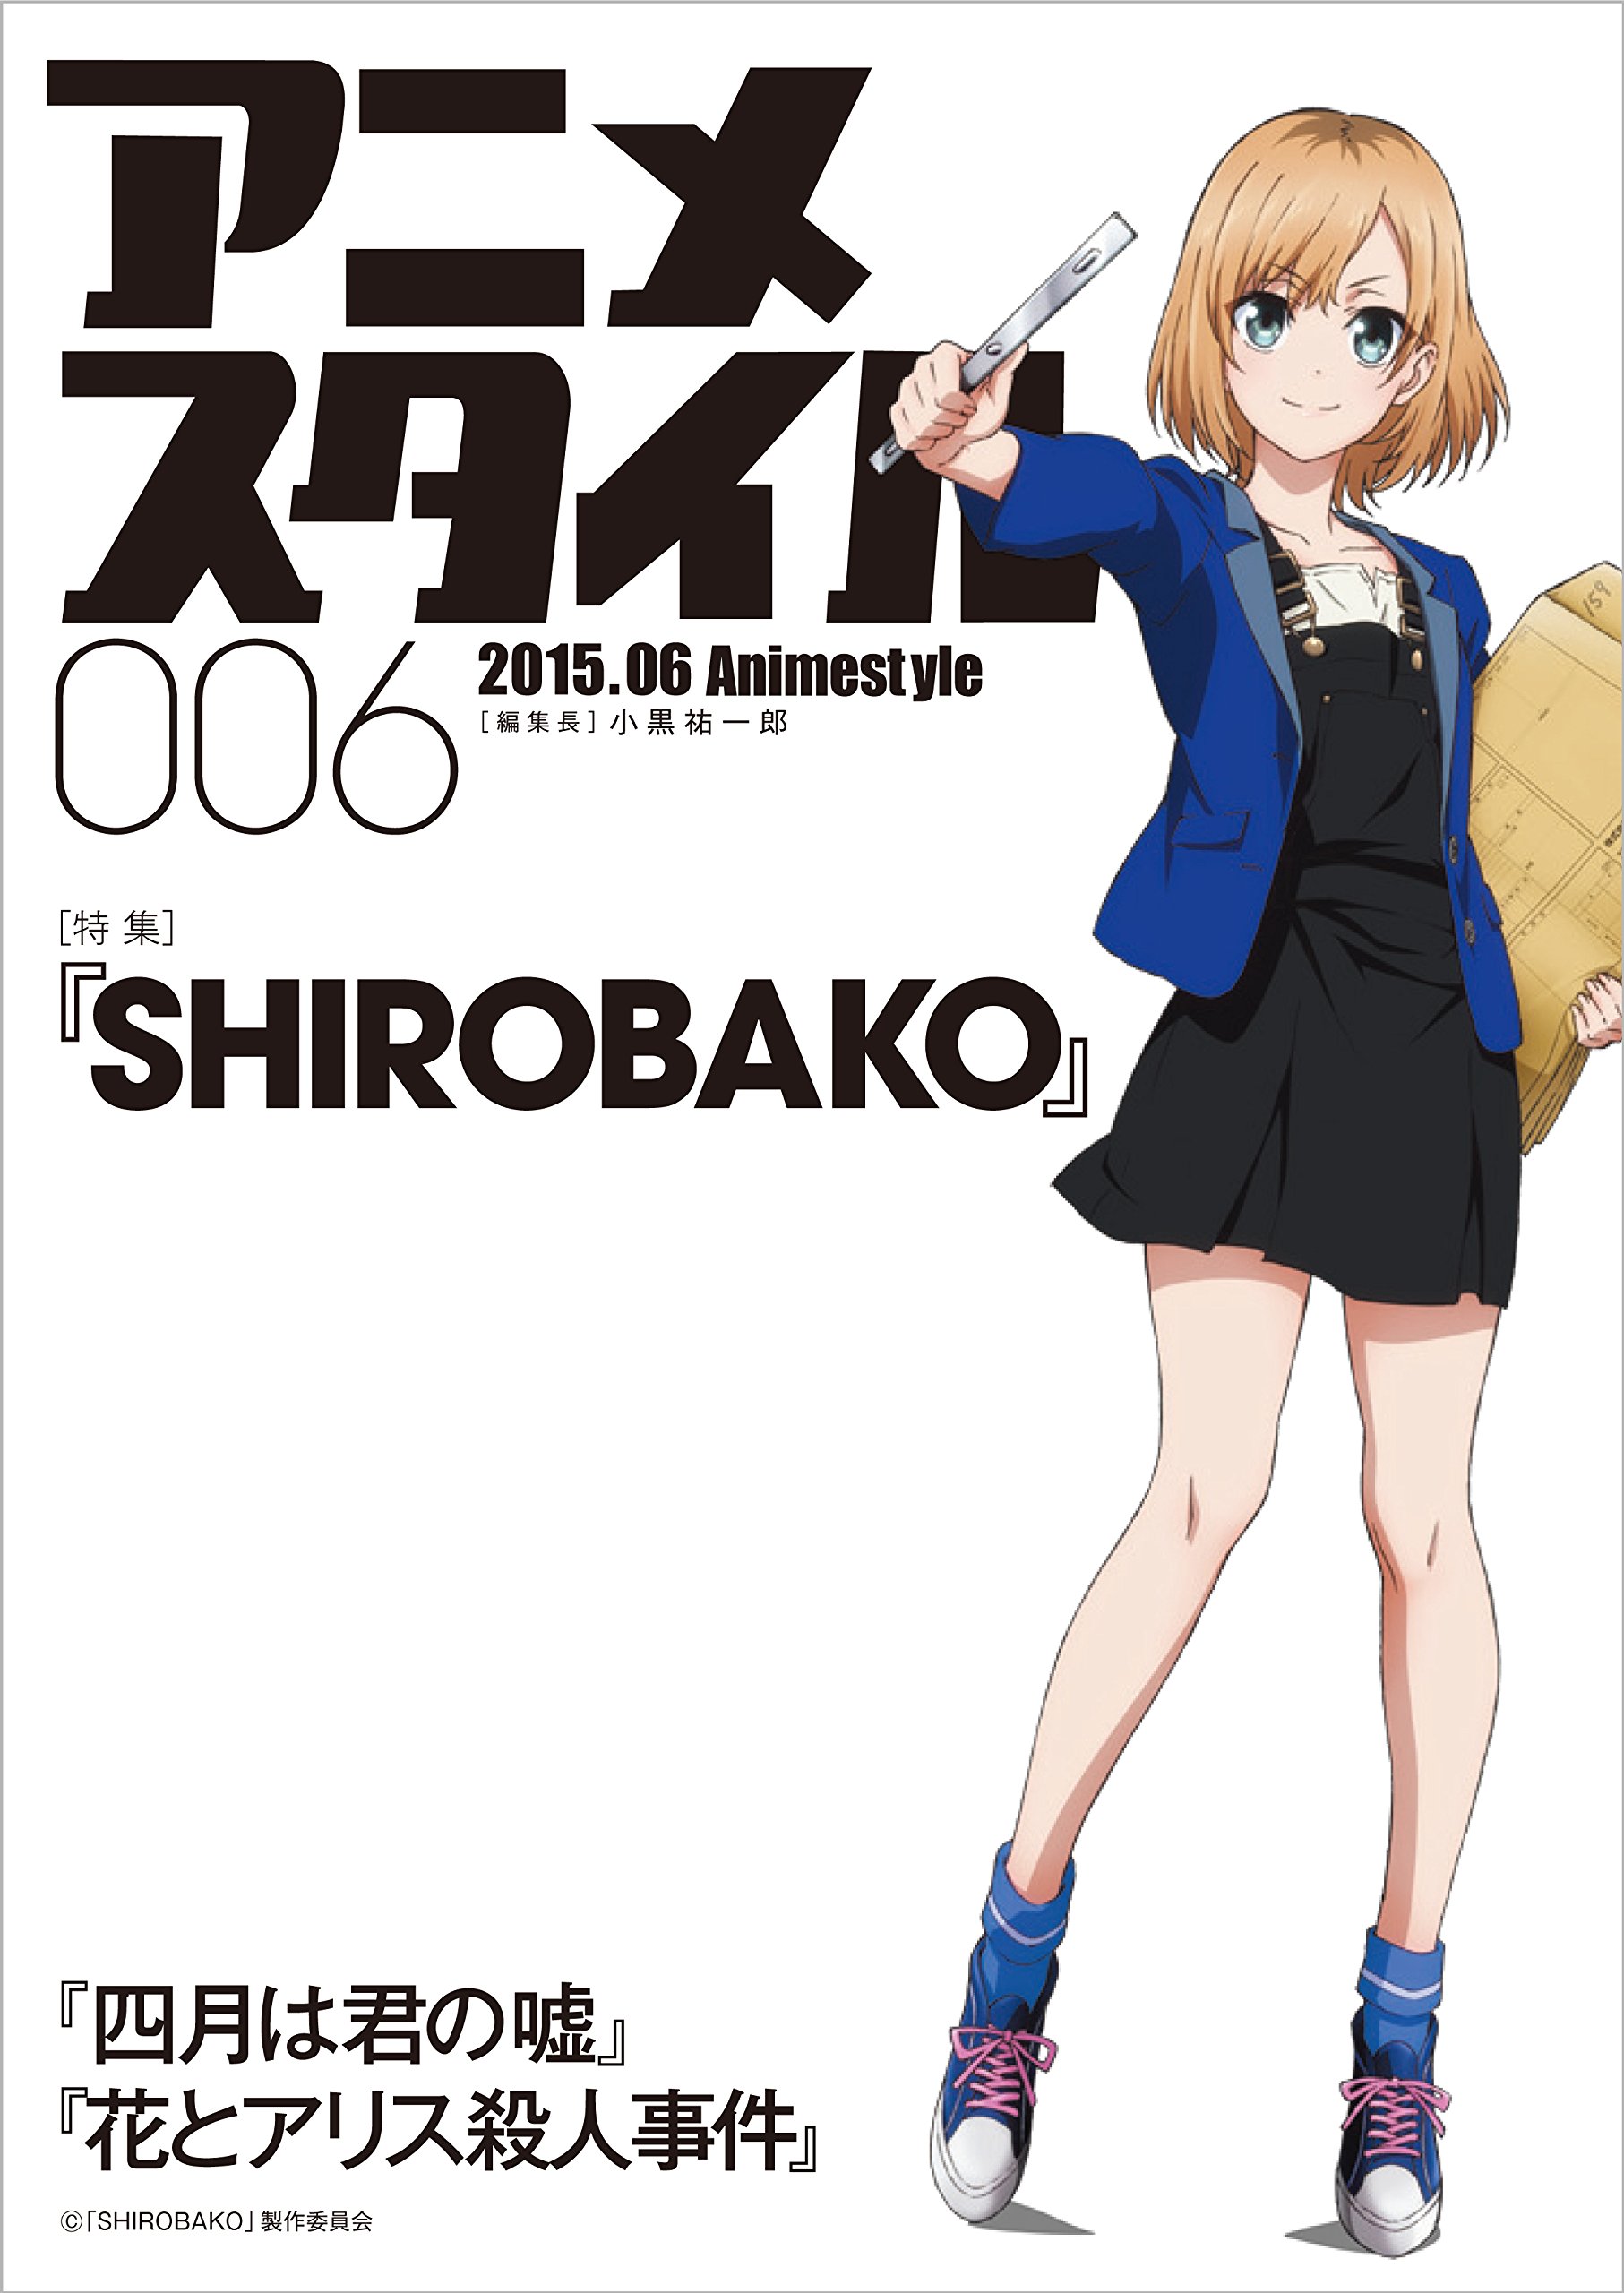 Shirobako anime style 6th cover